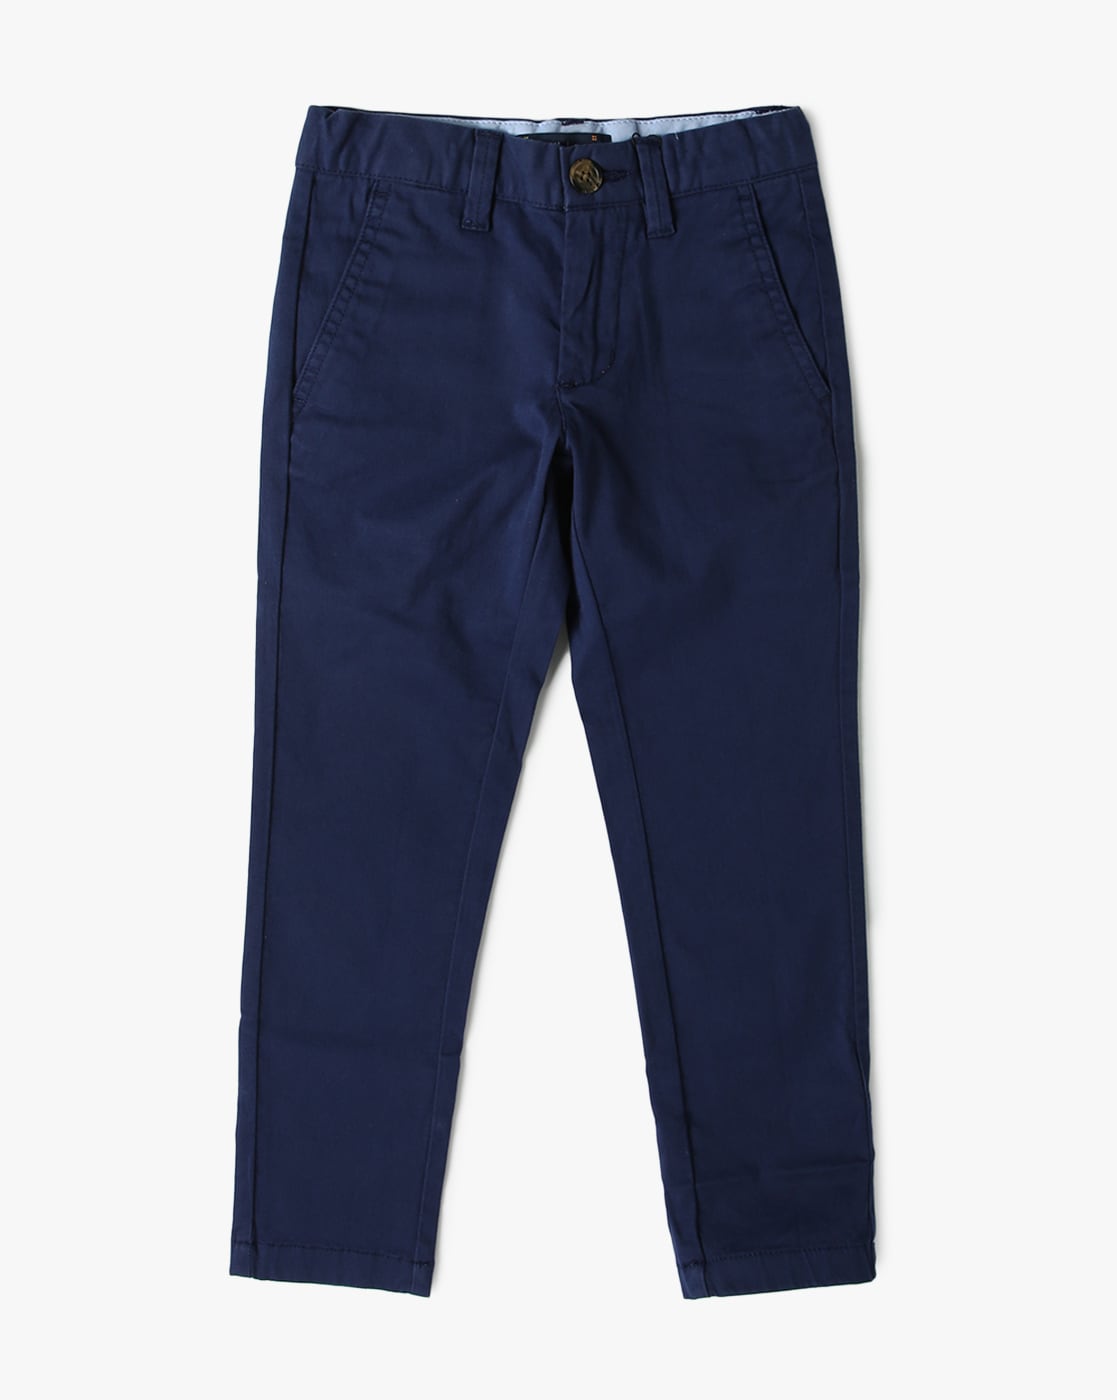 Boys Shorts & Trousers | Chinos & Jeans | La Coqueta Kids